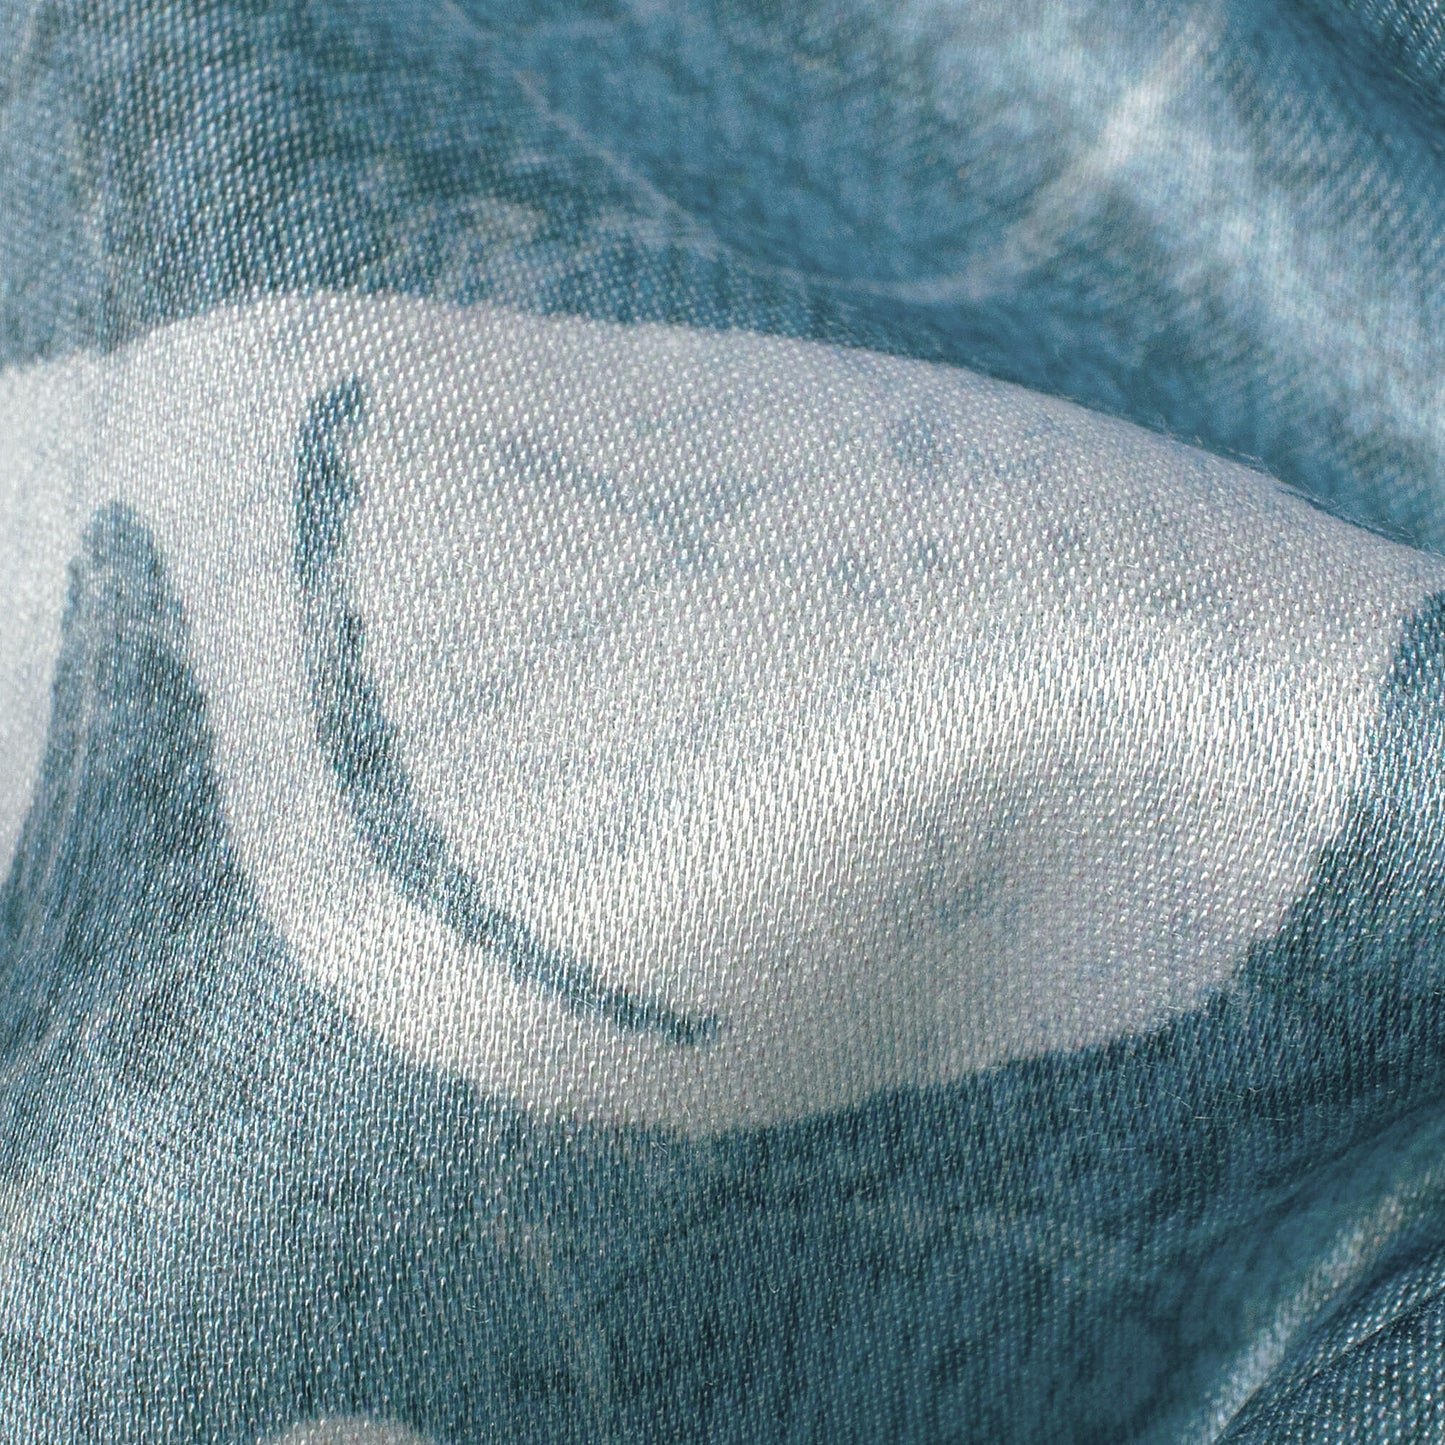 Chetwode Blue And White Quirky Pattern Digital Print Premium Lush Satin Fabric